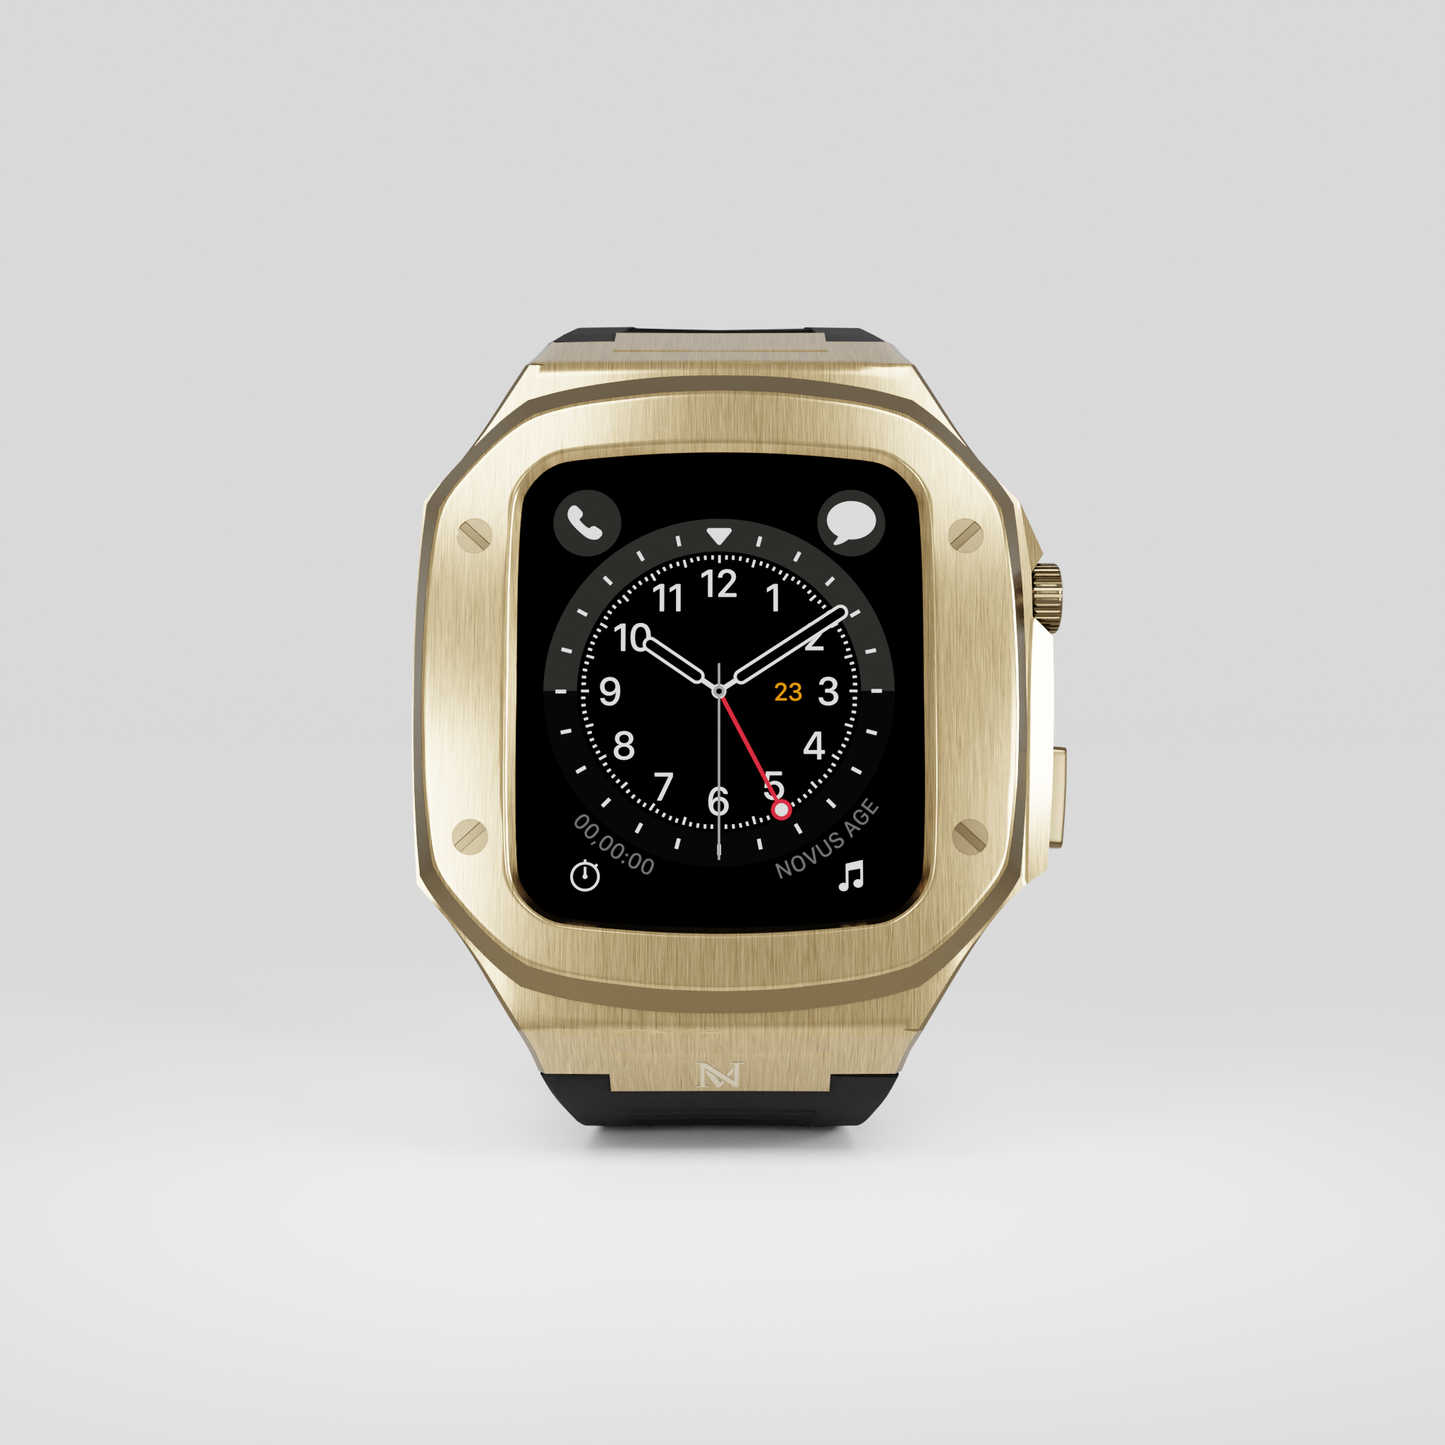 Apple Watch Case Sport Series - Gold